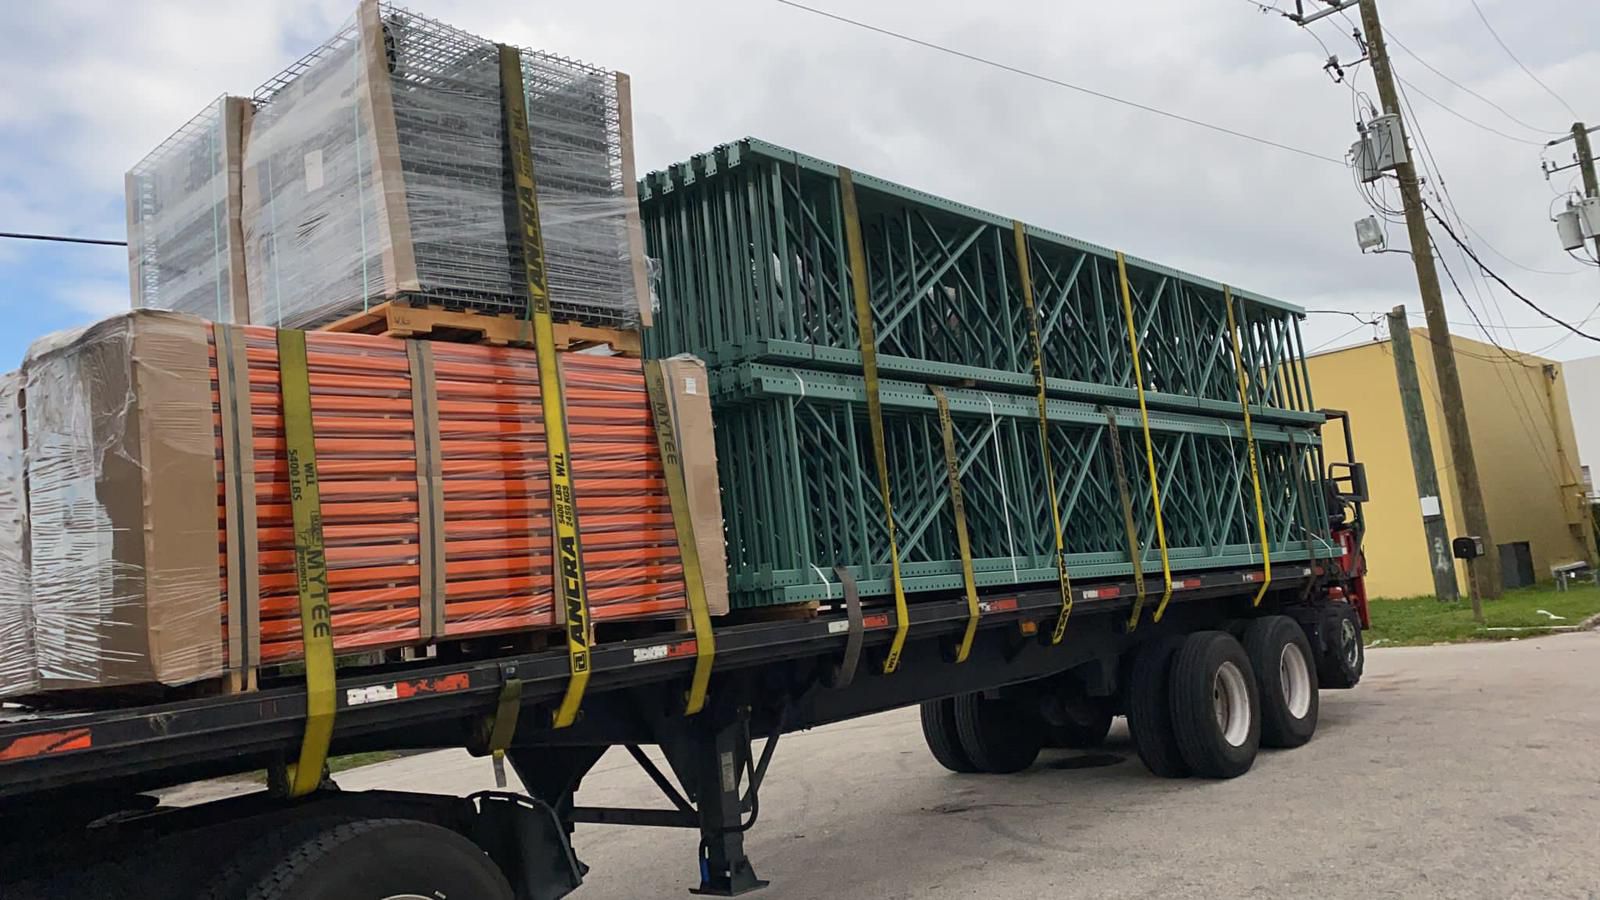 Pallet Racks Beams Uprights Wire Decks Forklifts Warehouse Industrial Racking